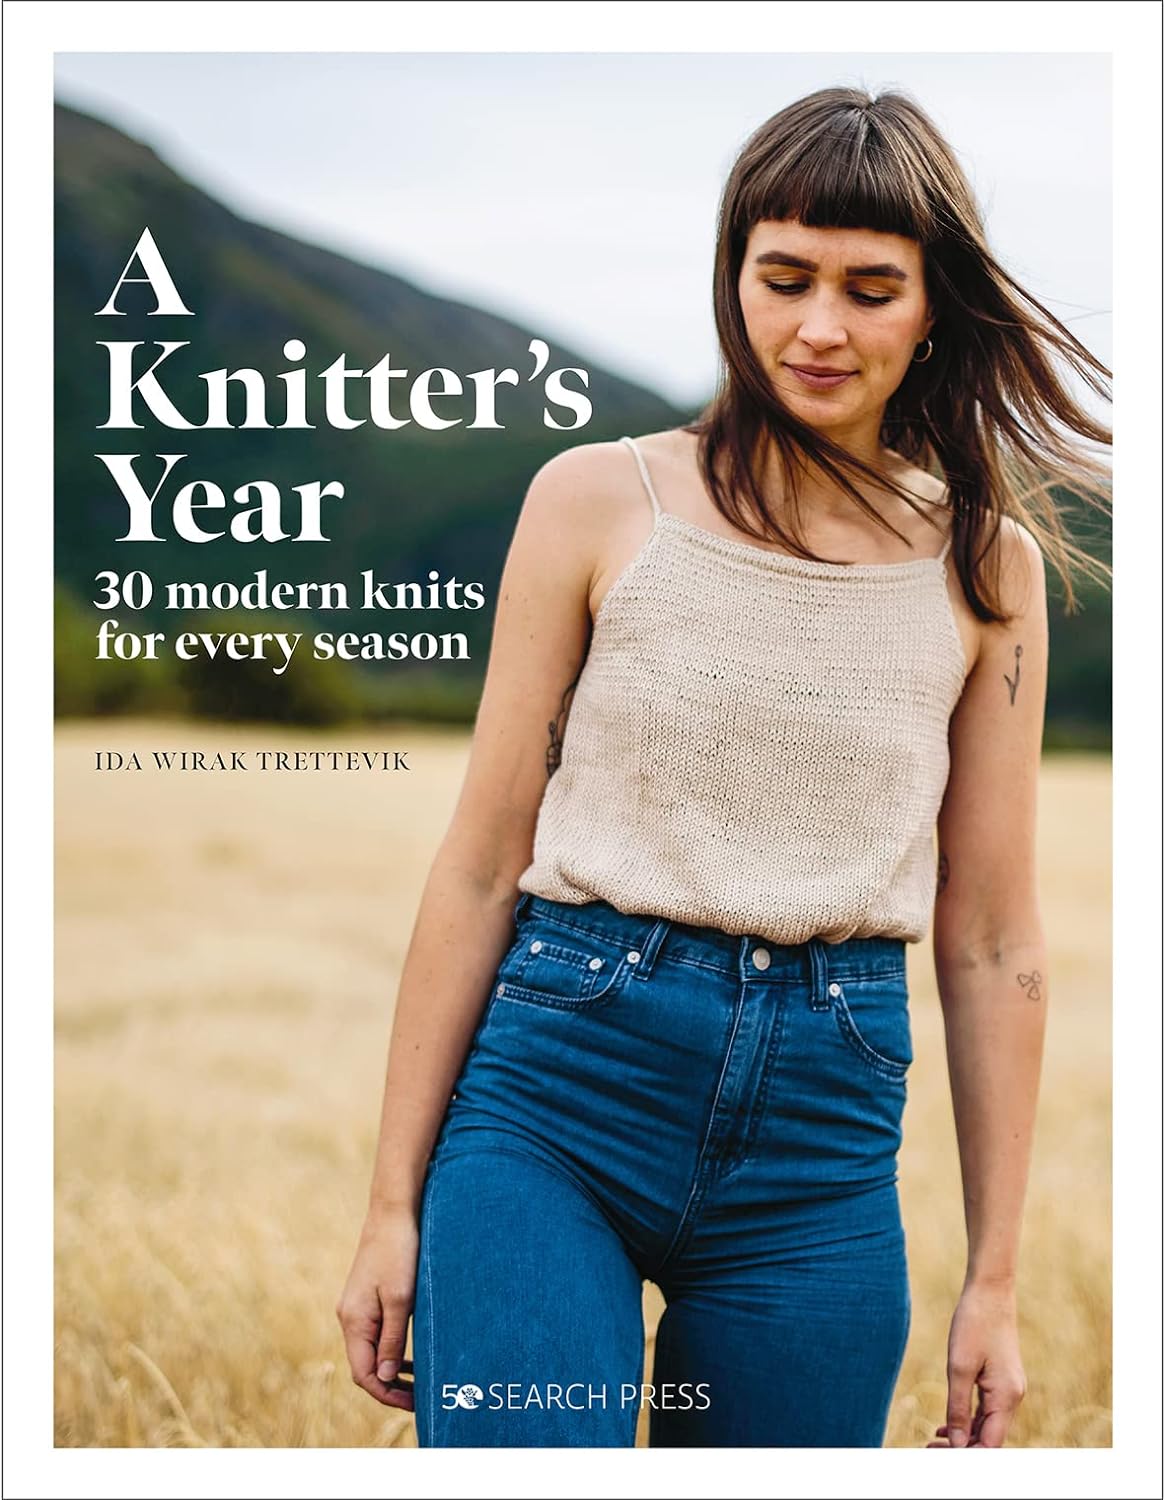 A Knitter's Year: 30 Modern Knits for Every Season by Ida Wirak Trettevik